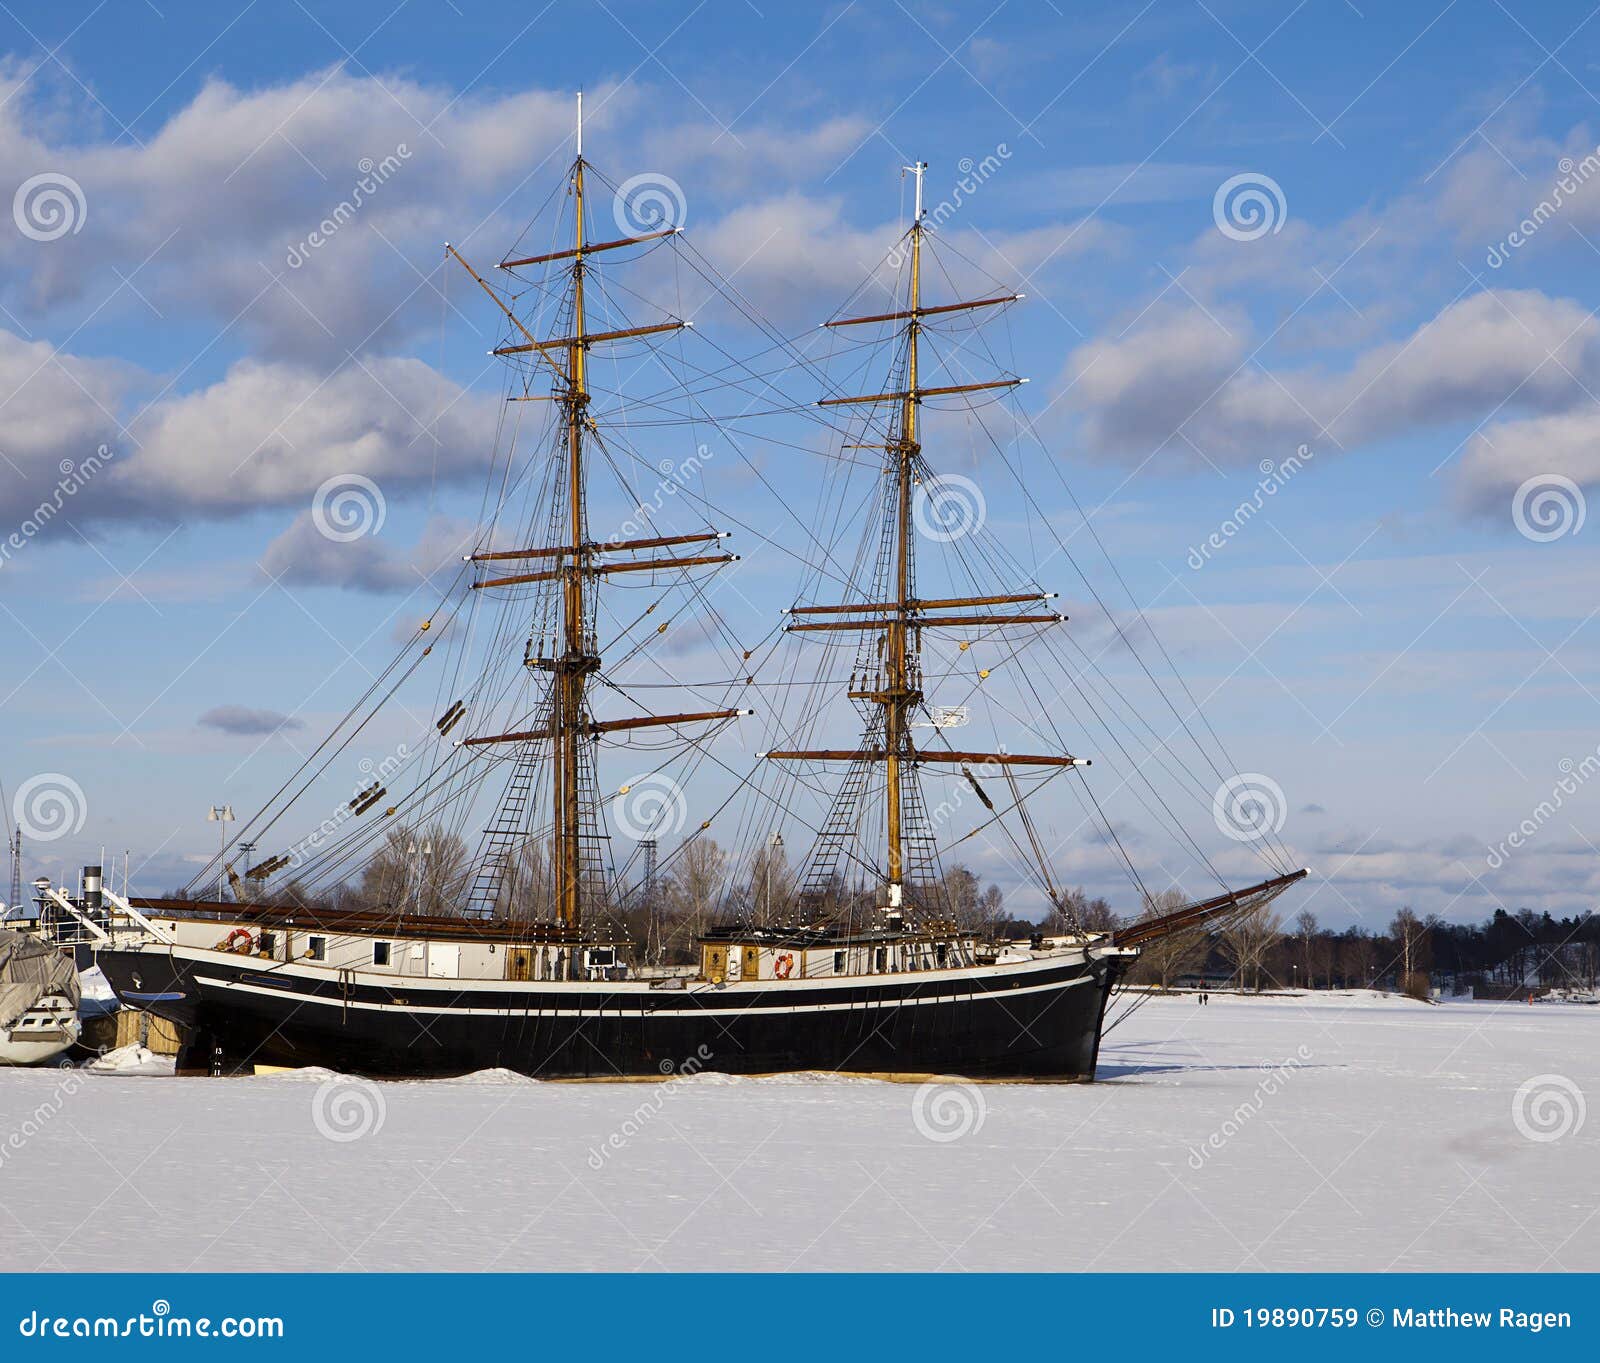 Two-Masted Sailing Ship Royalty Free Stock Images - Image ...